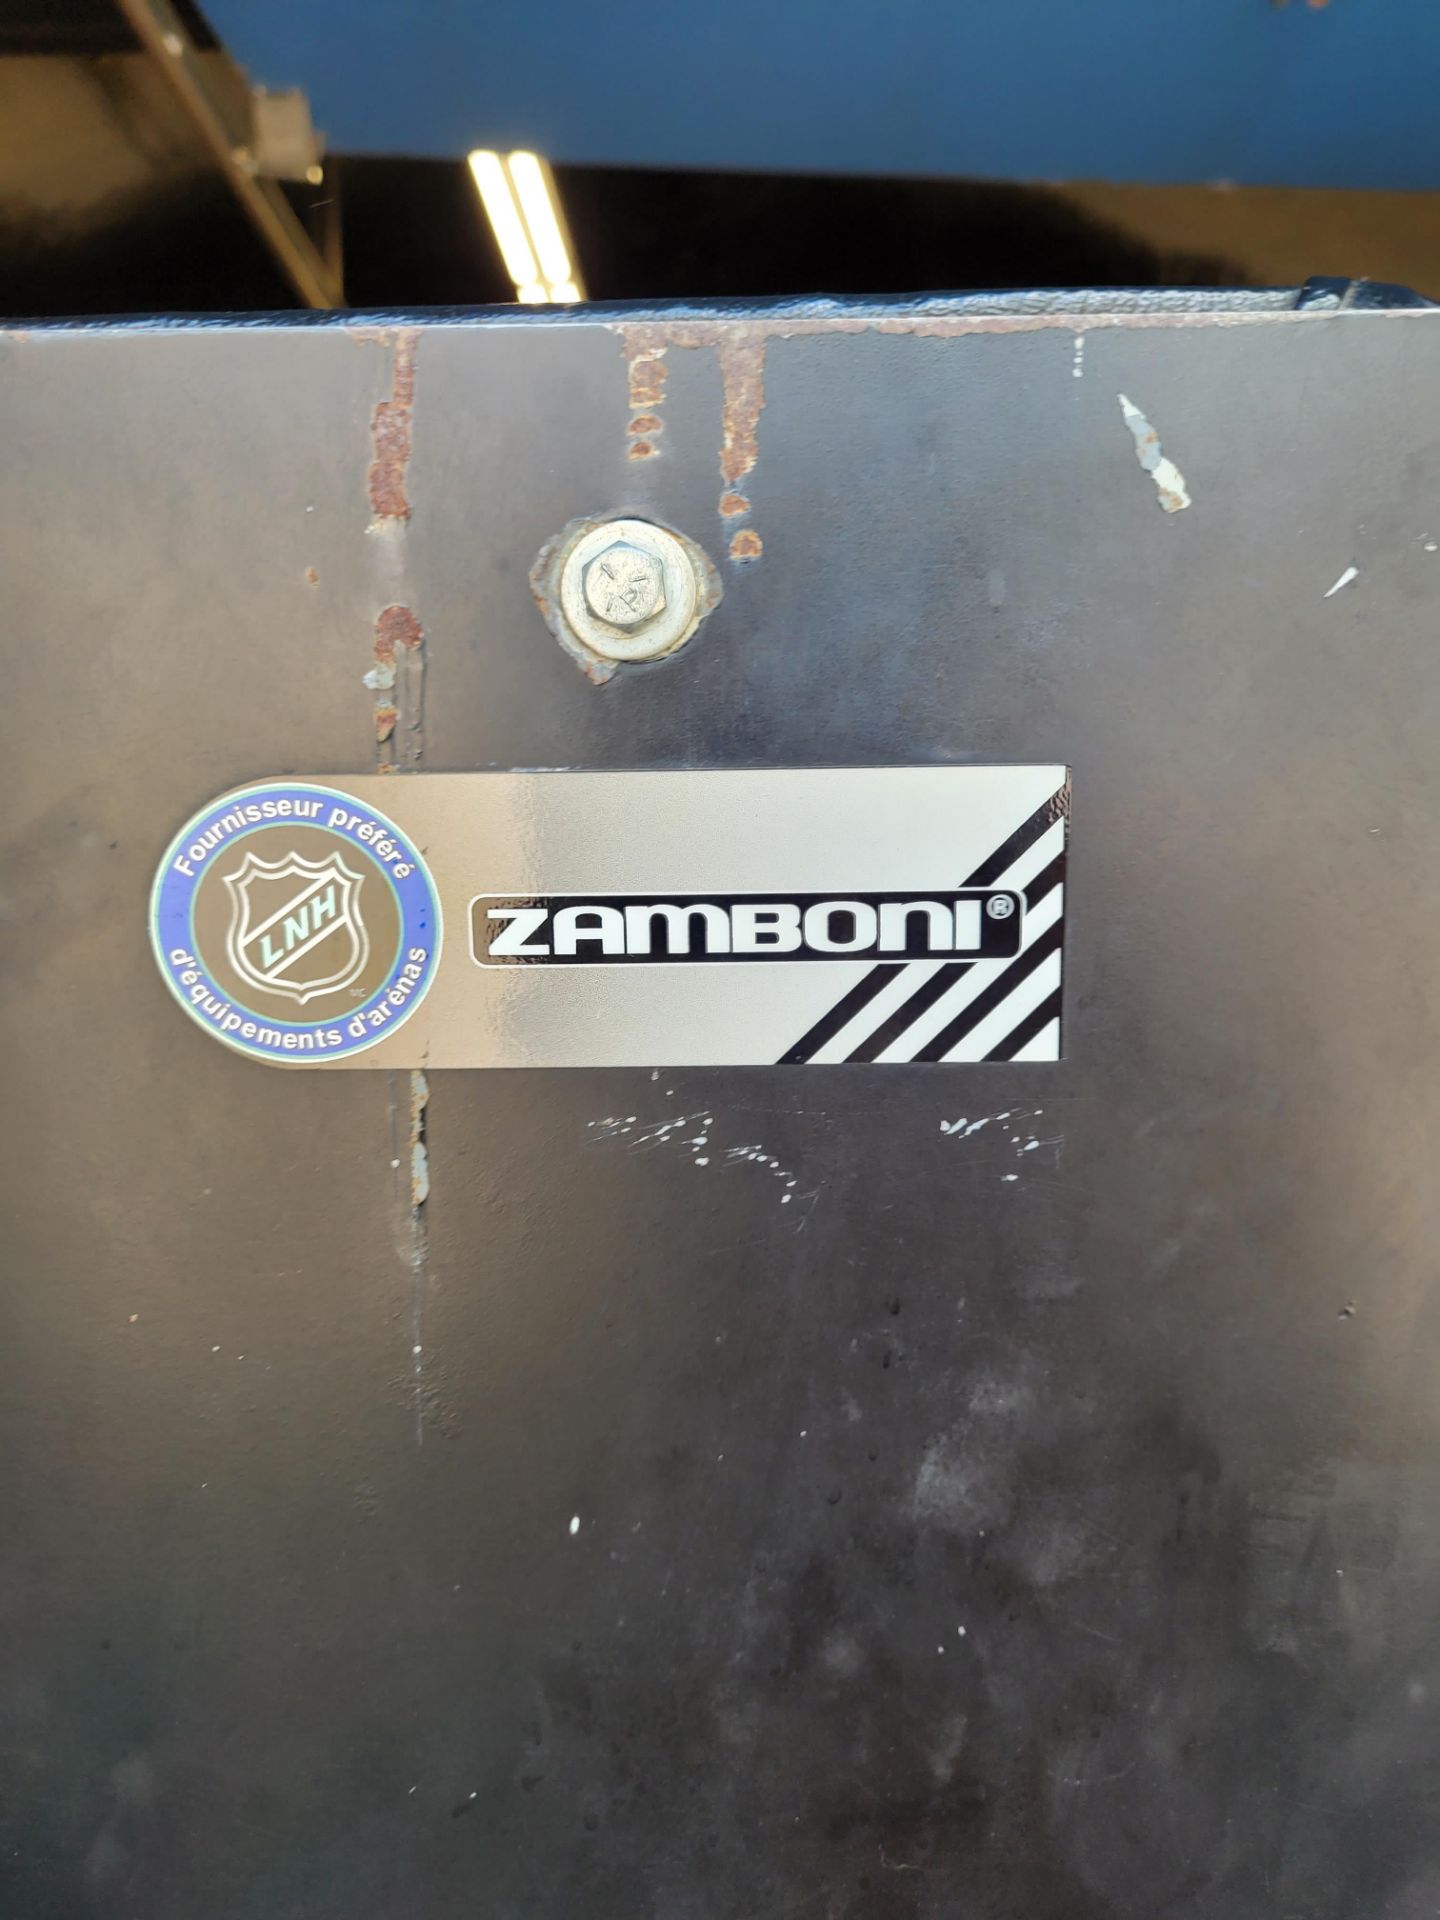 ZAMBONI Ice Resurfacer mod. 520, ser. 3524, propane power - mfg. Frank J. Zamboni & Co. Ltd. Fully f - Image 19 of 36